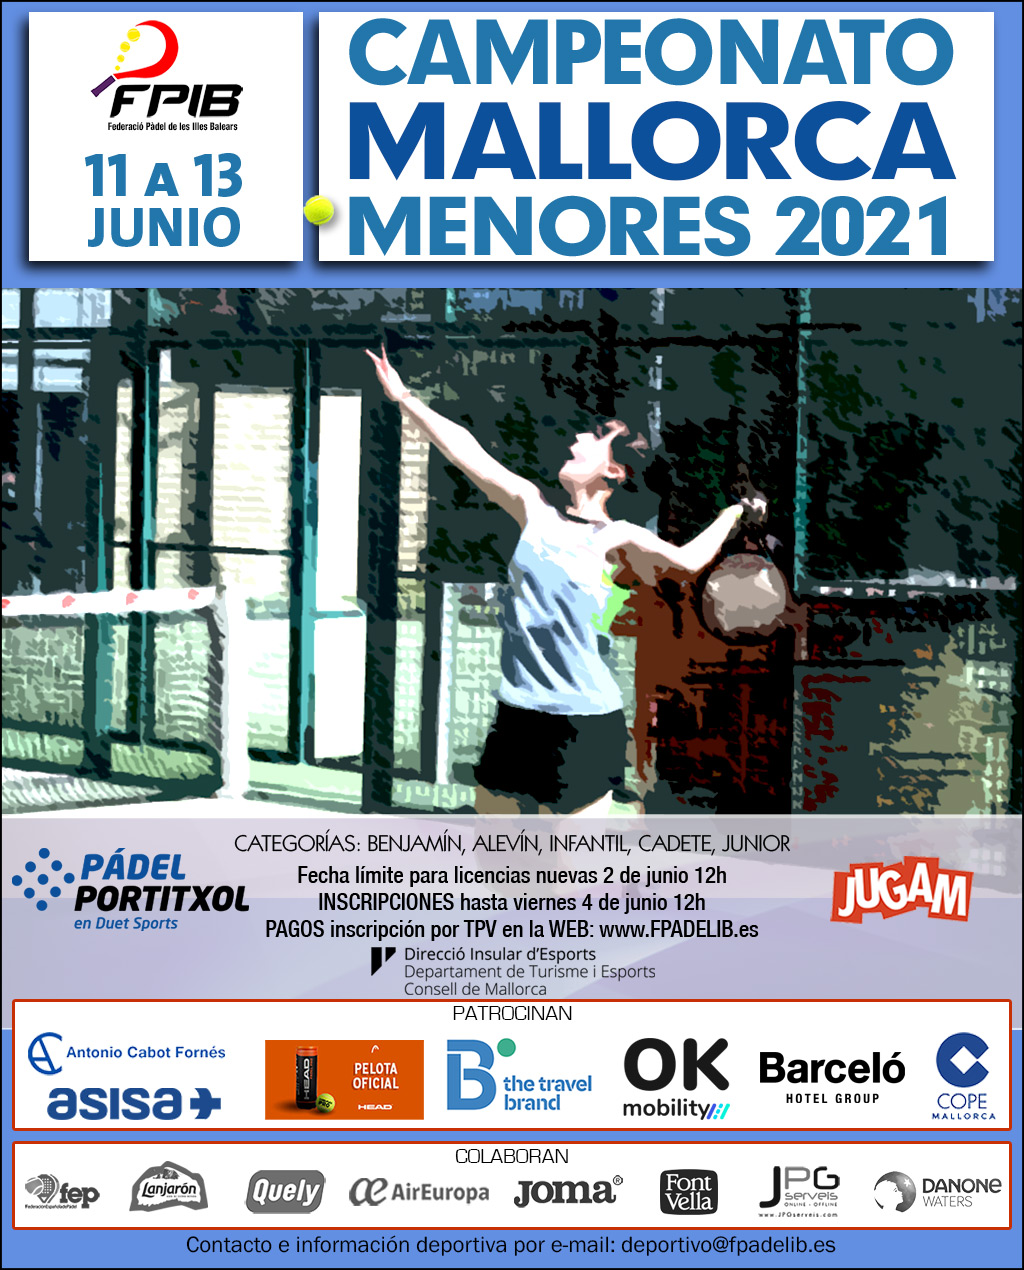 Campeonato de Mallorca de menores 2021